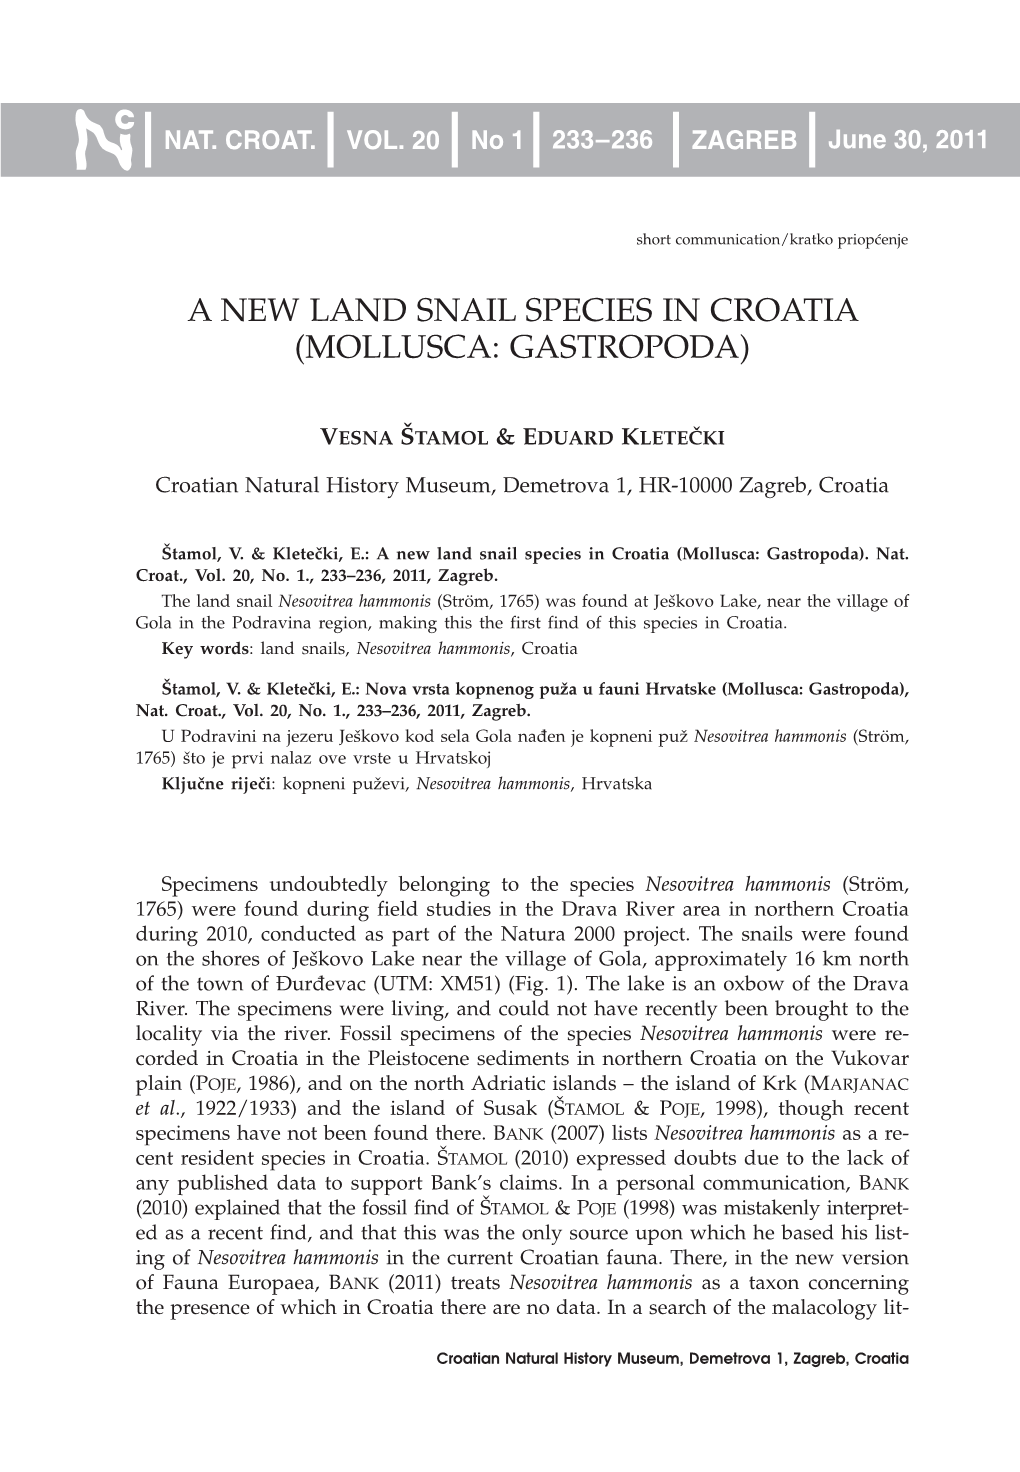 A New Land Snail Species in Croatia (Mollusca: Gastropoda)